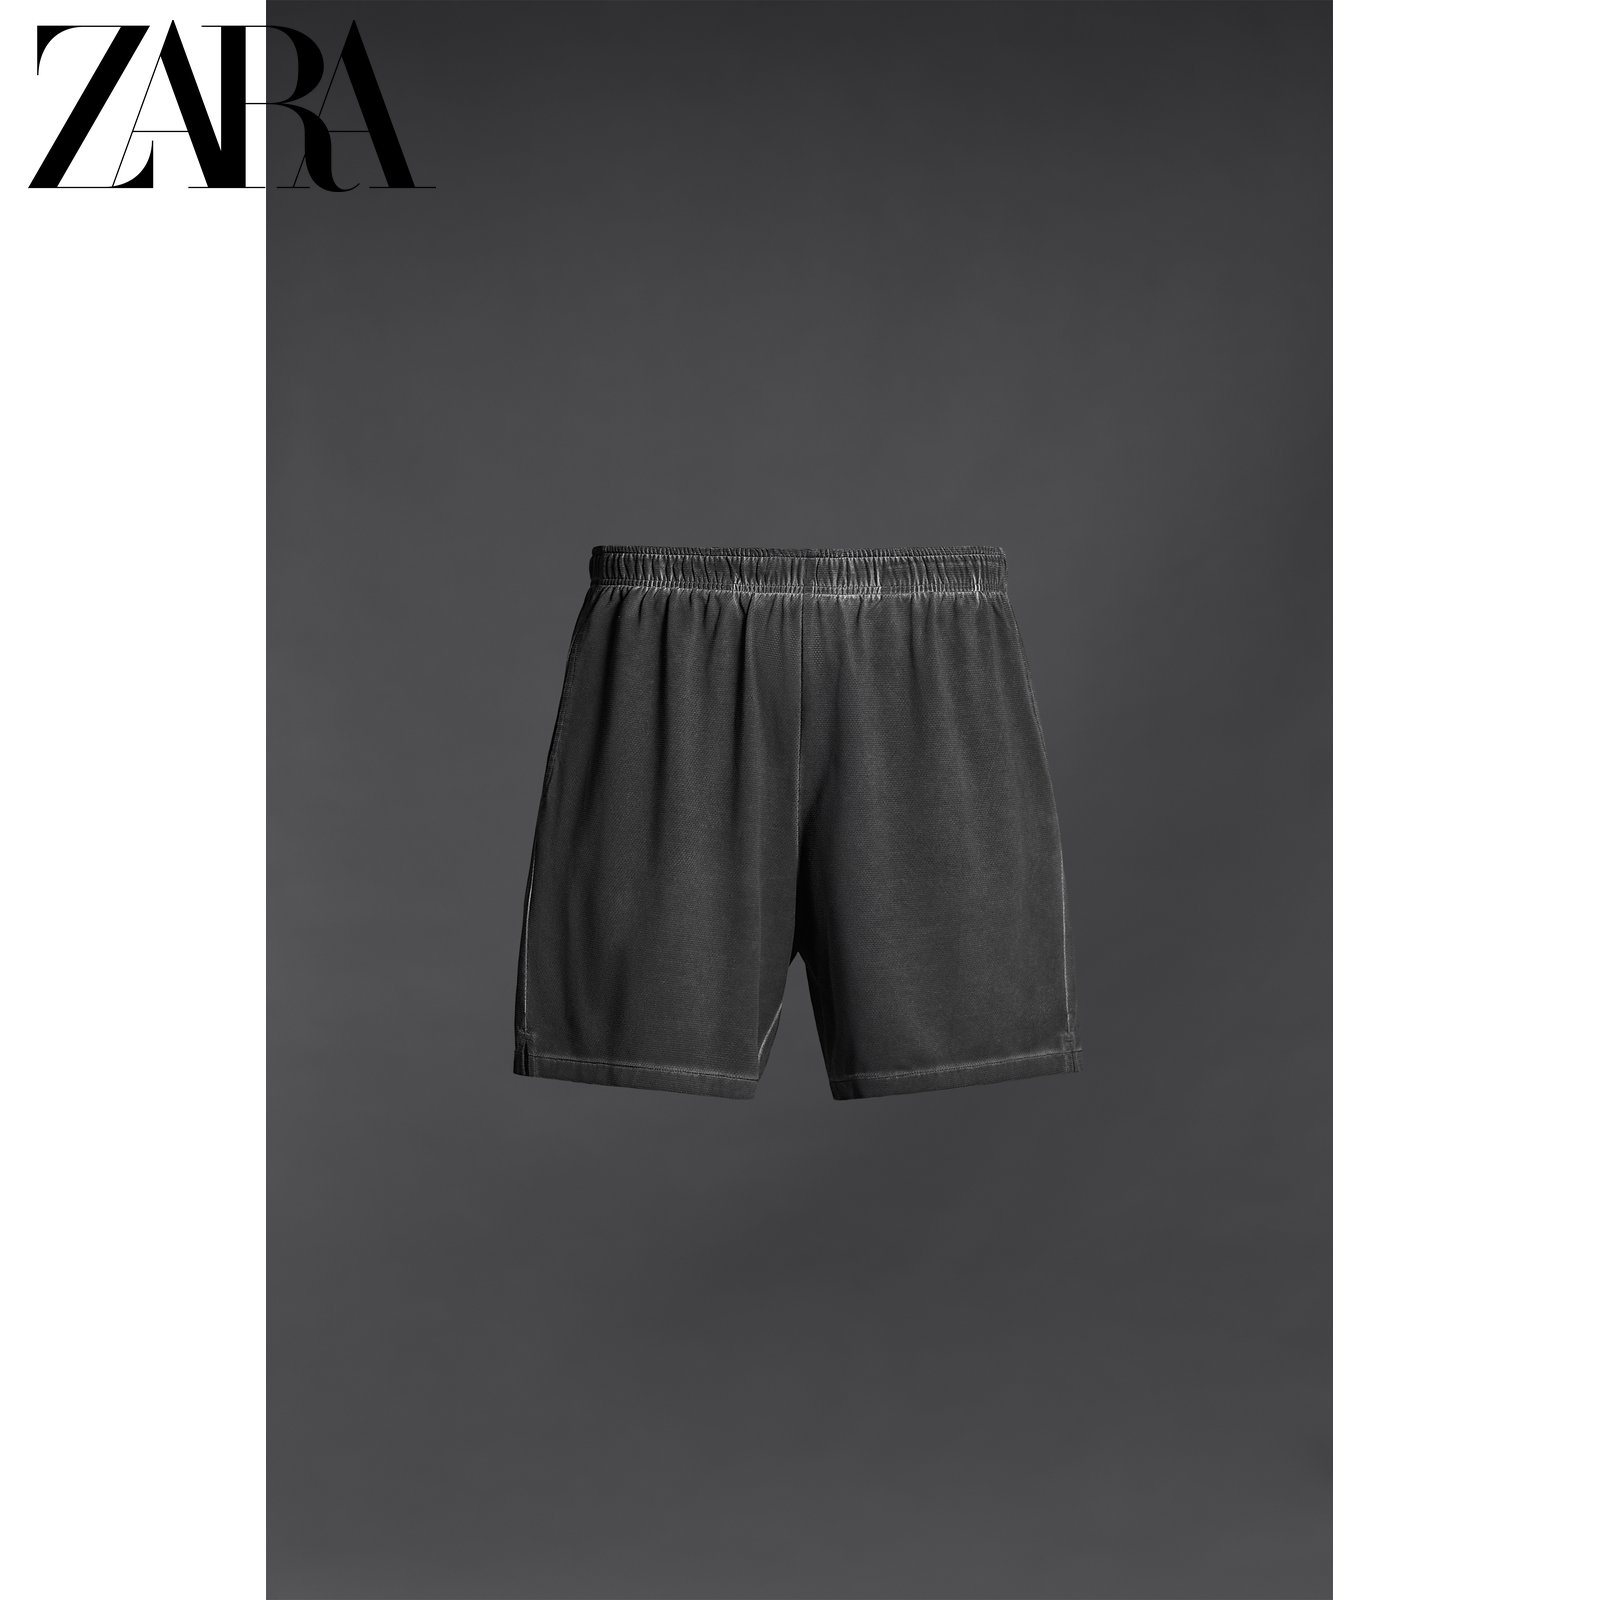 ZARA[运动系列] 男装 宽松弹力轻盈纹理运动透气短裤 4092400 922